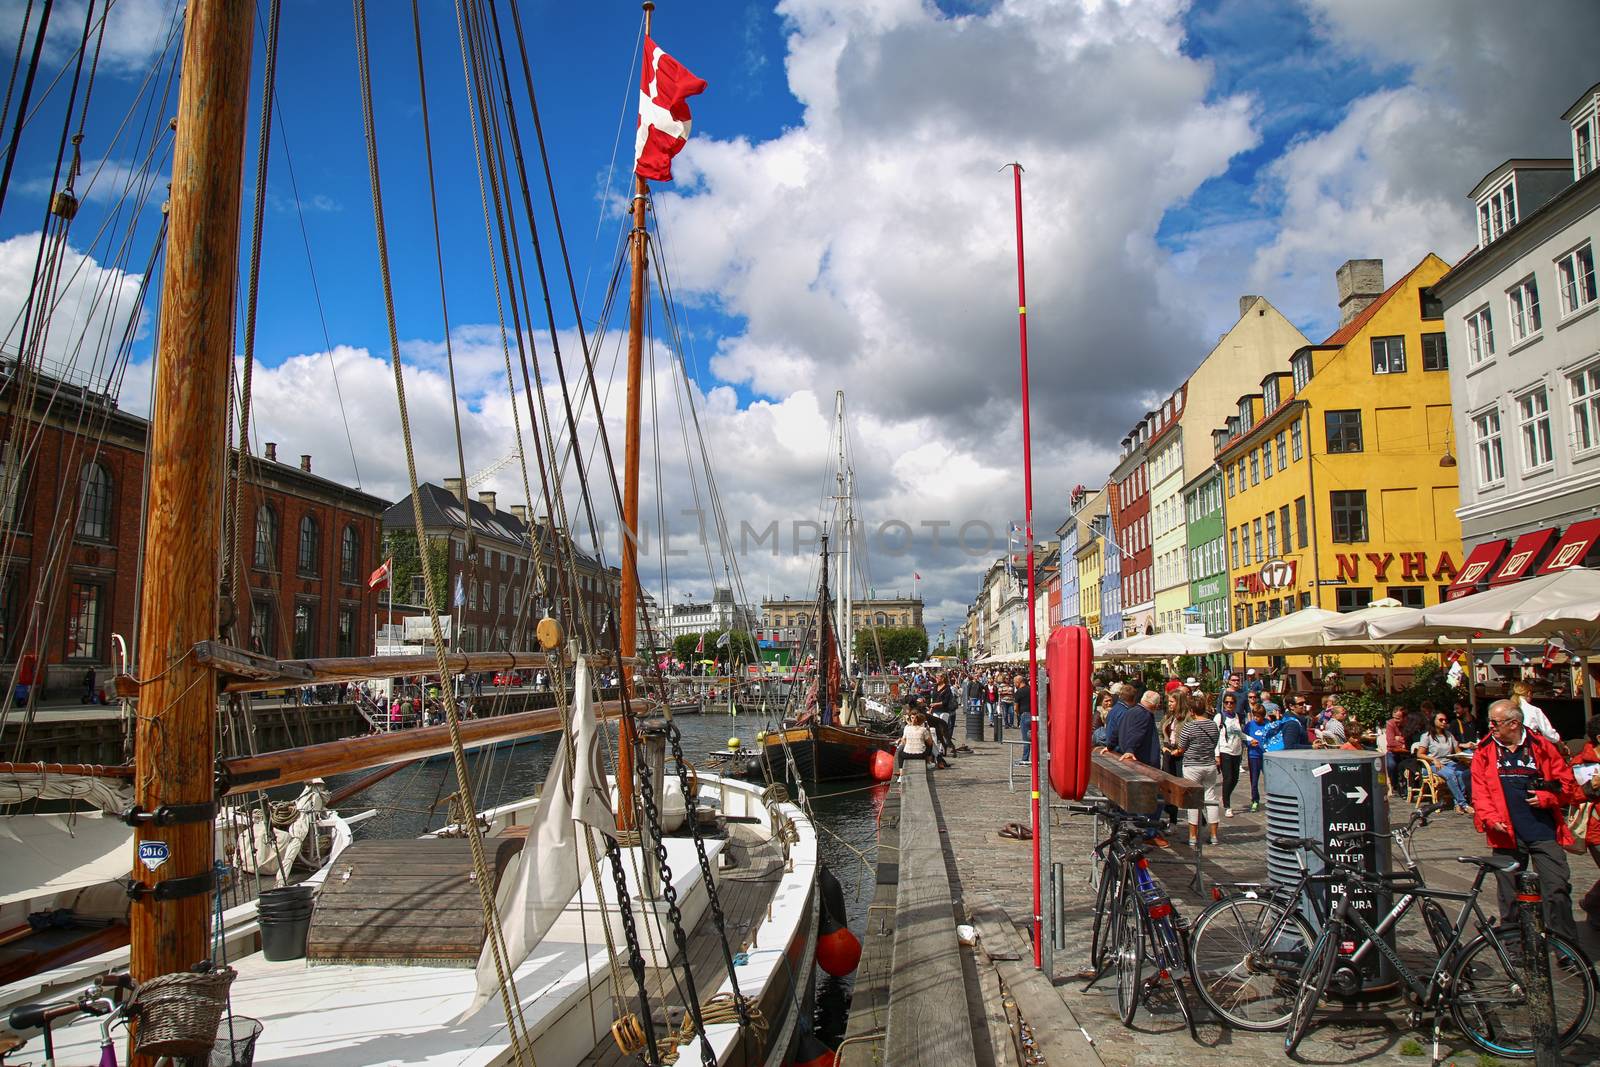 COPENHAGEN, DENMARK - AUGUST 14, 2016: Boats in the docks Nyhavn, people, restaurants and colorful architecture. Nyhavn a 17th century harbour in Copenhagen, Denmark on August 14, 2016.